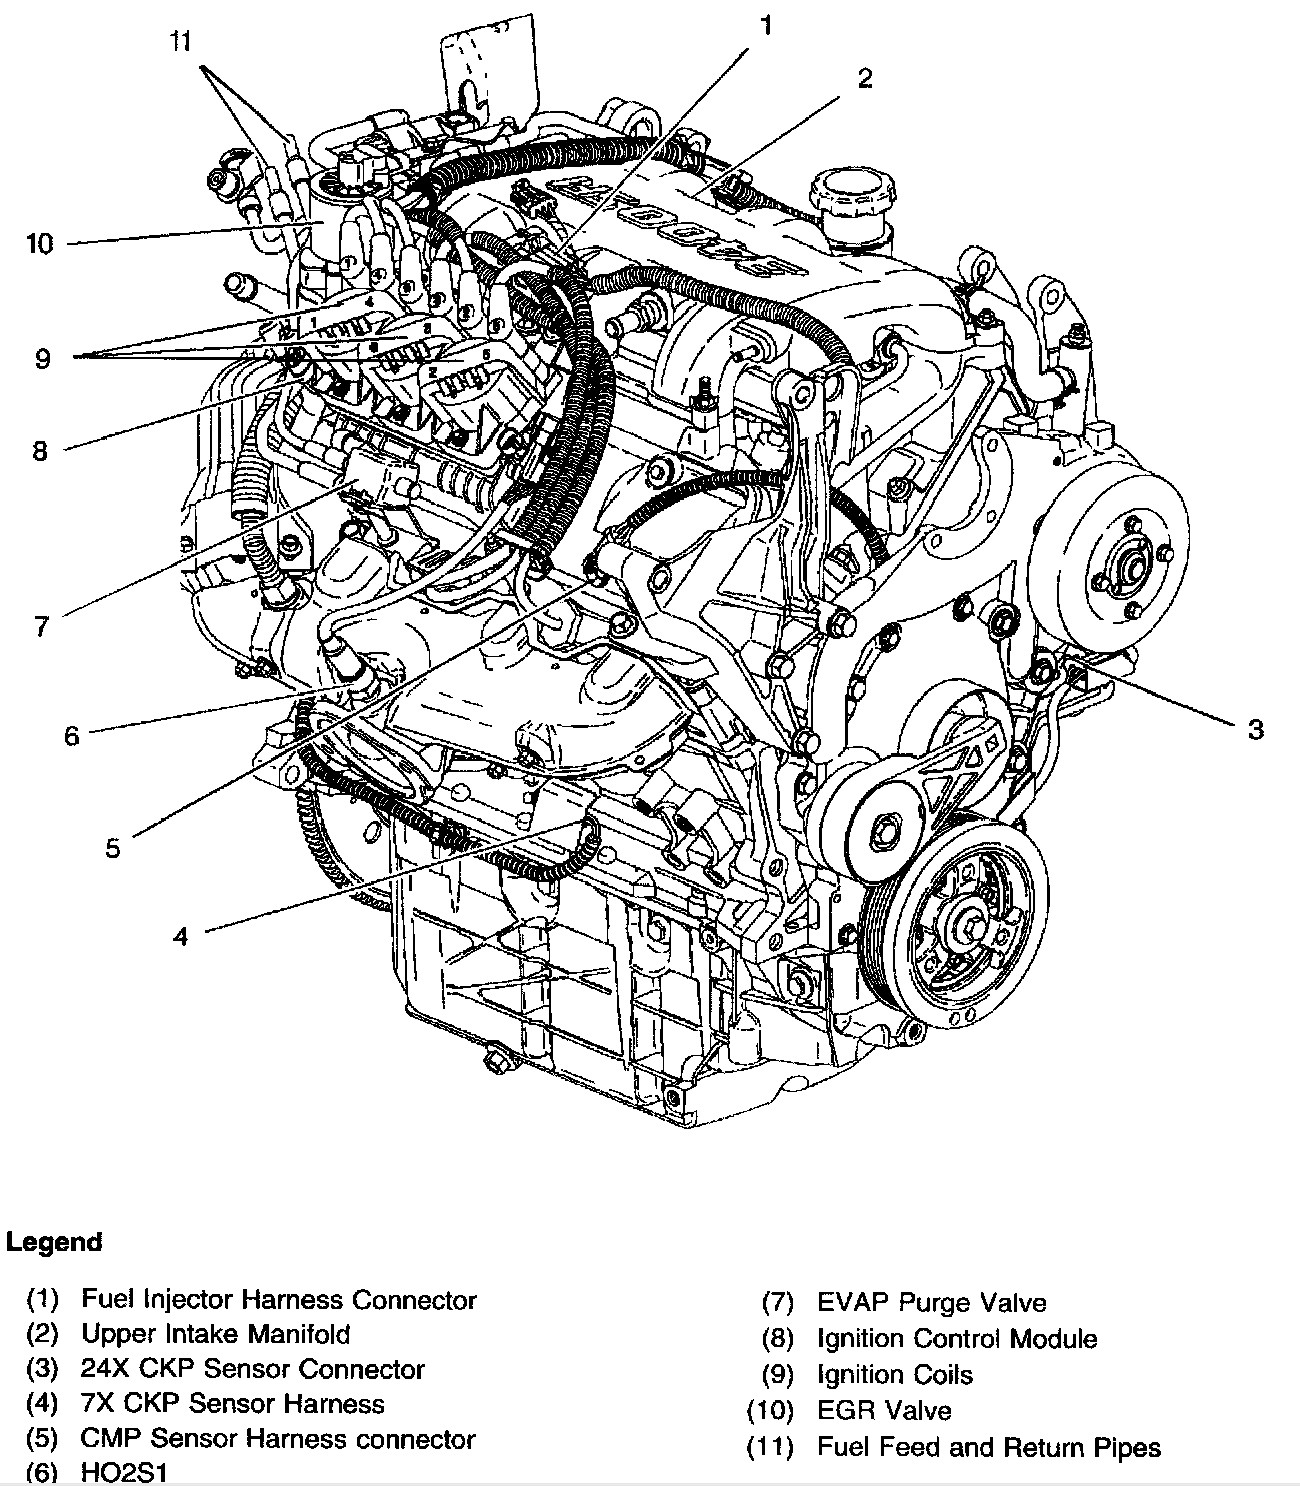 2004 Chevy Aveo Engine Diagram 06 Silverado Engine Diagram Wiring Diagram Datasource Of 2004 Chevy Aveo Engine Diagram